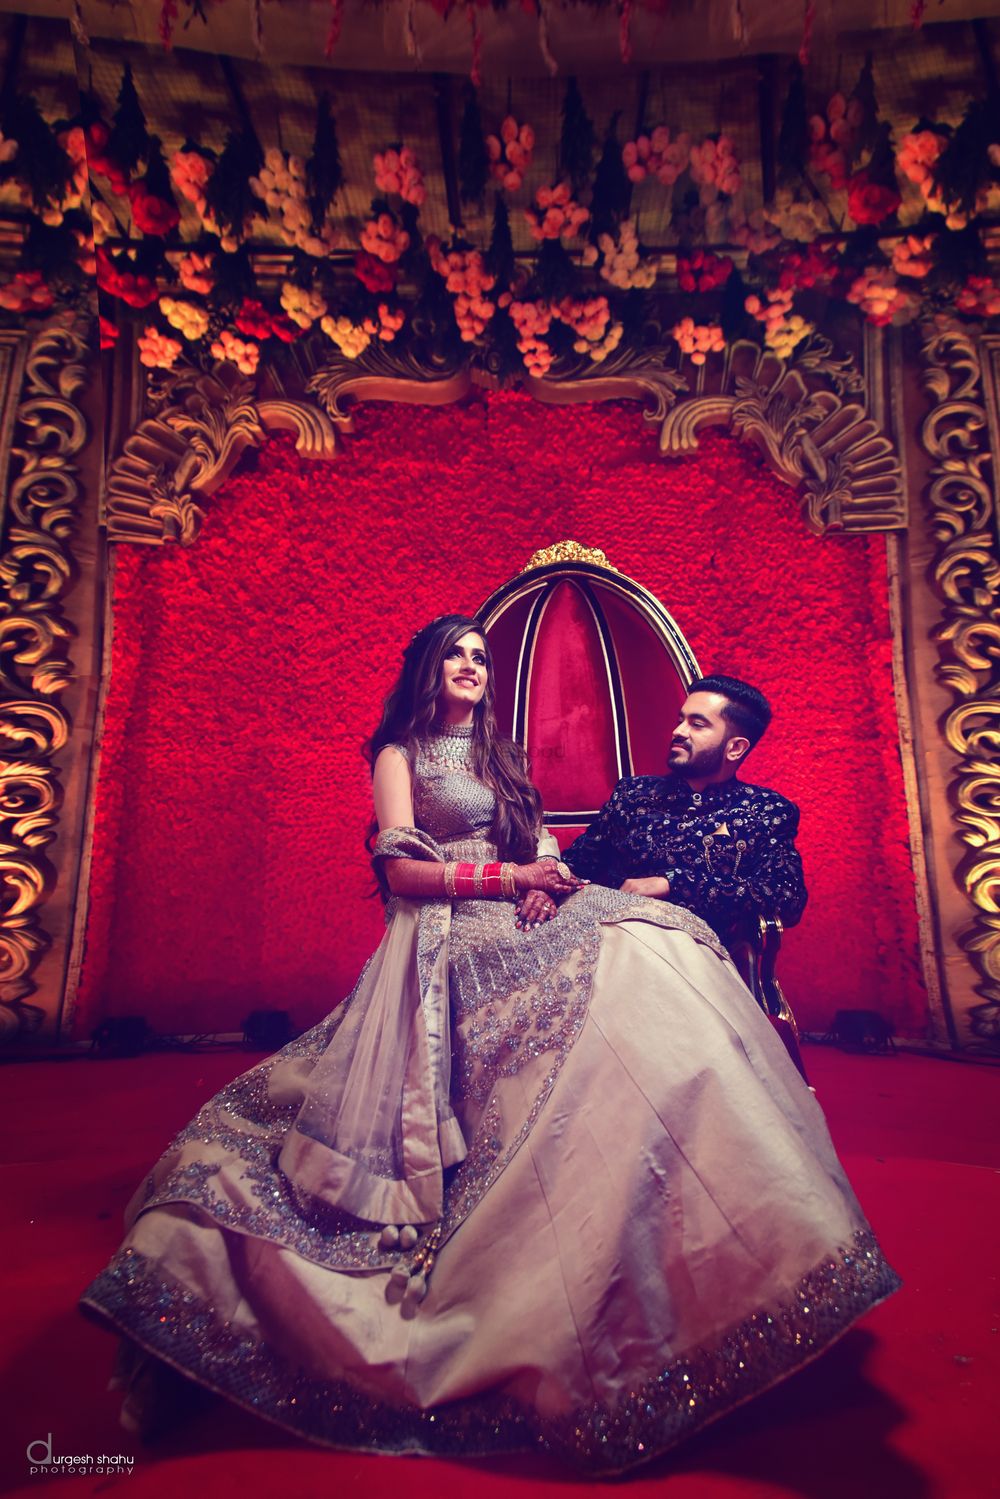 Photo From Himanshu & Vinita Wedding tale - By Durgesh Shahu Photography